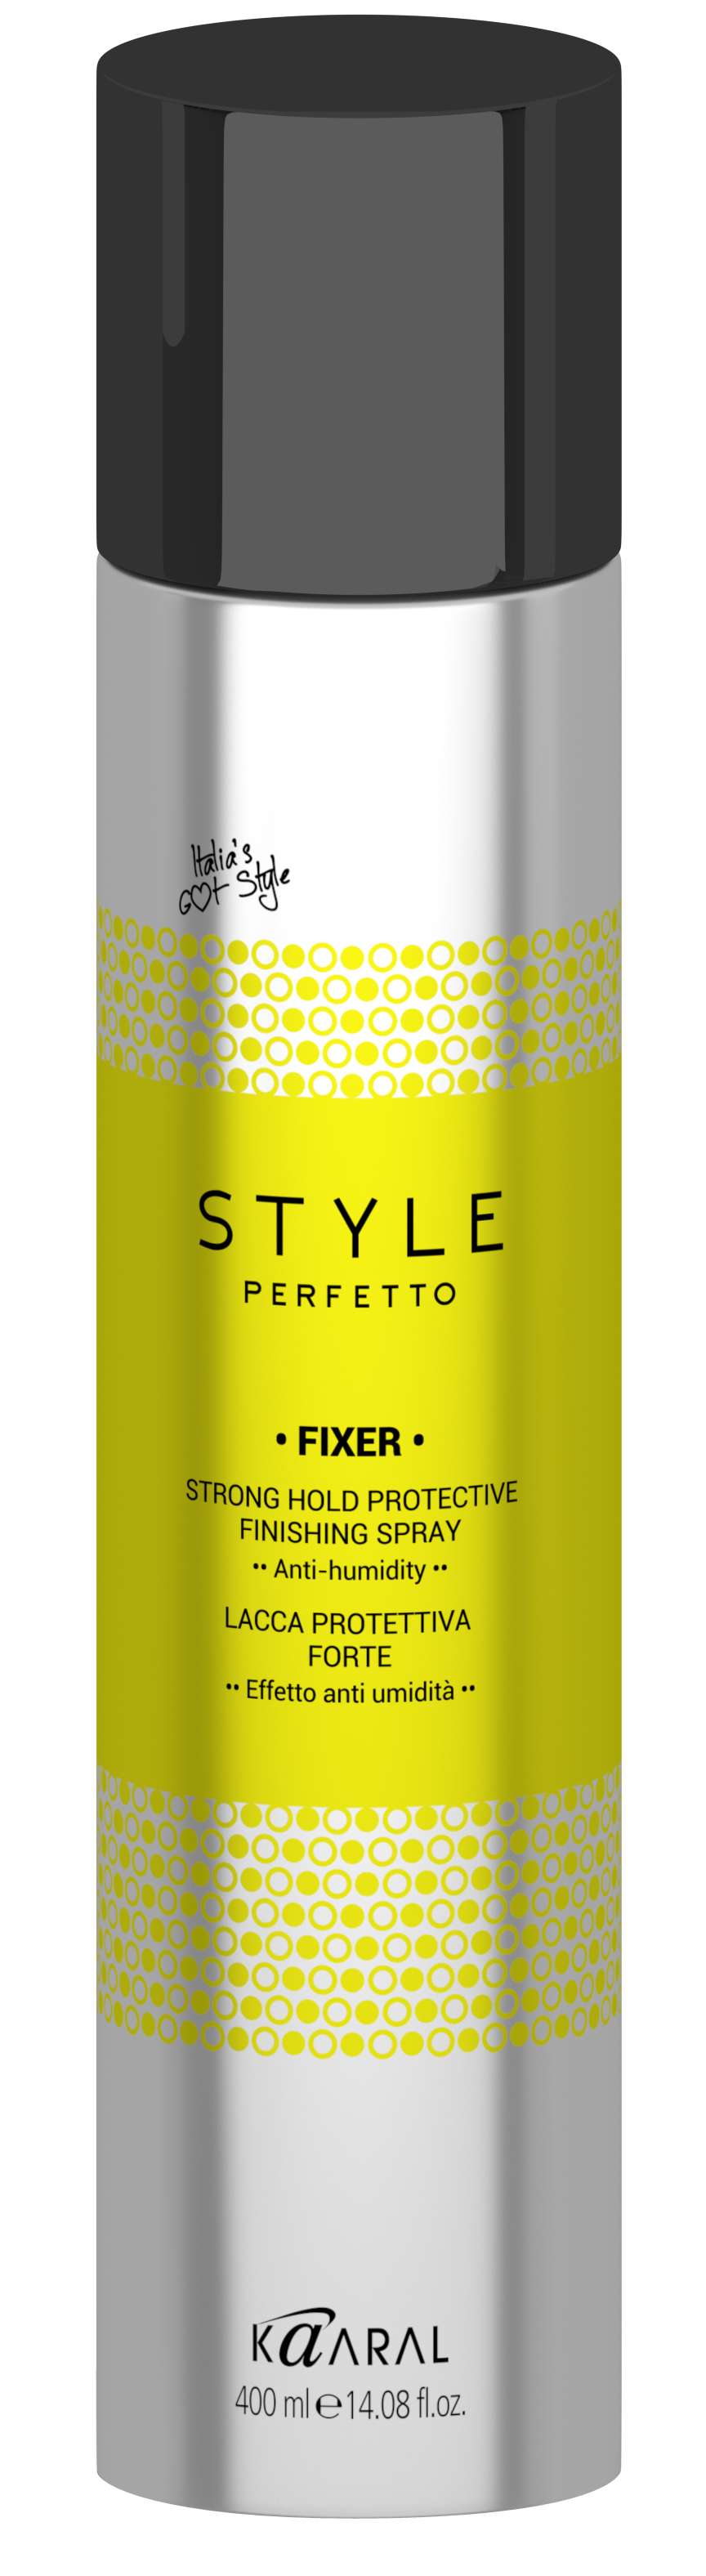 Style Perfetto  Защитный лак д/волос сил. фикс.400мл Fixer Strong Hold Protective Finishing Spray.